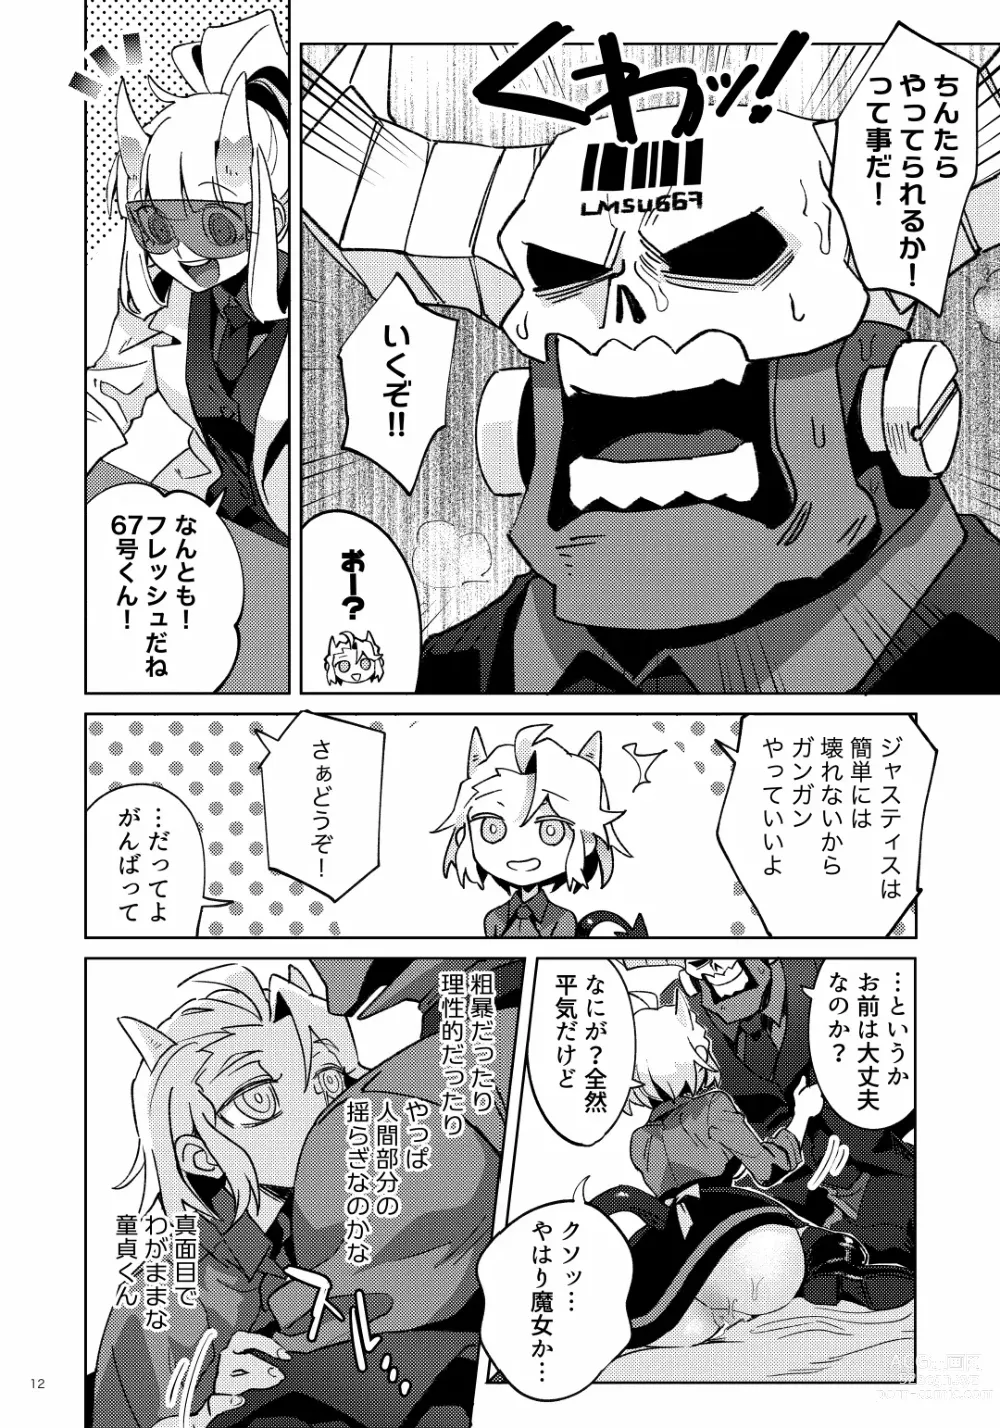 Page 11 of doujinshi Re: